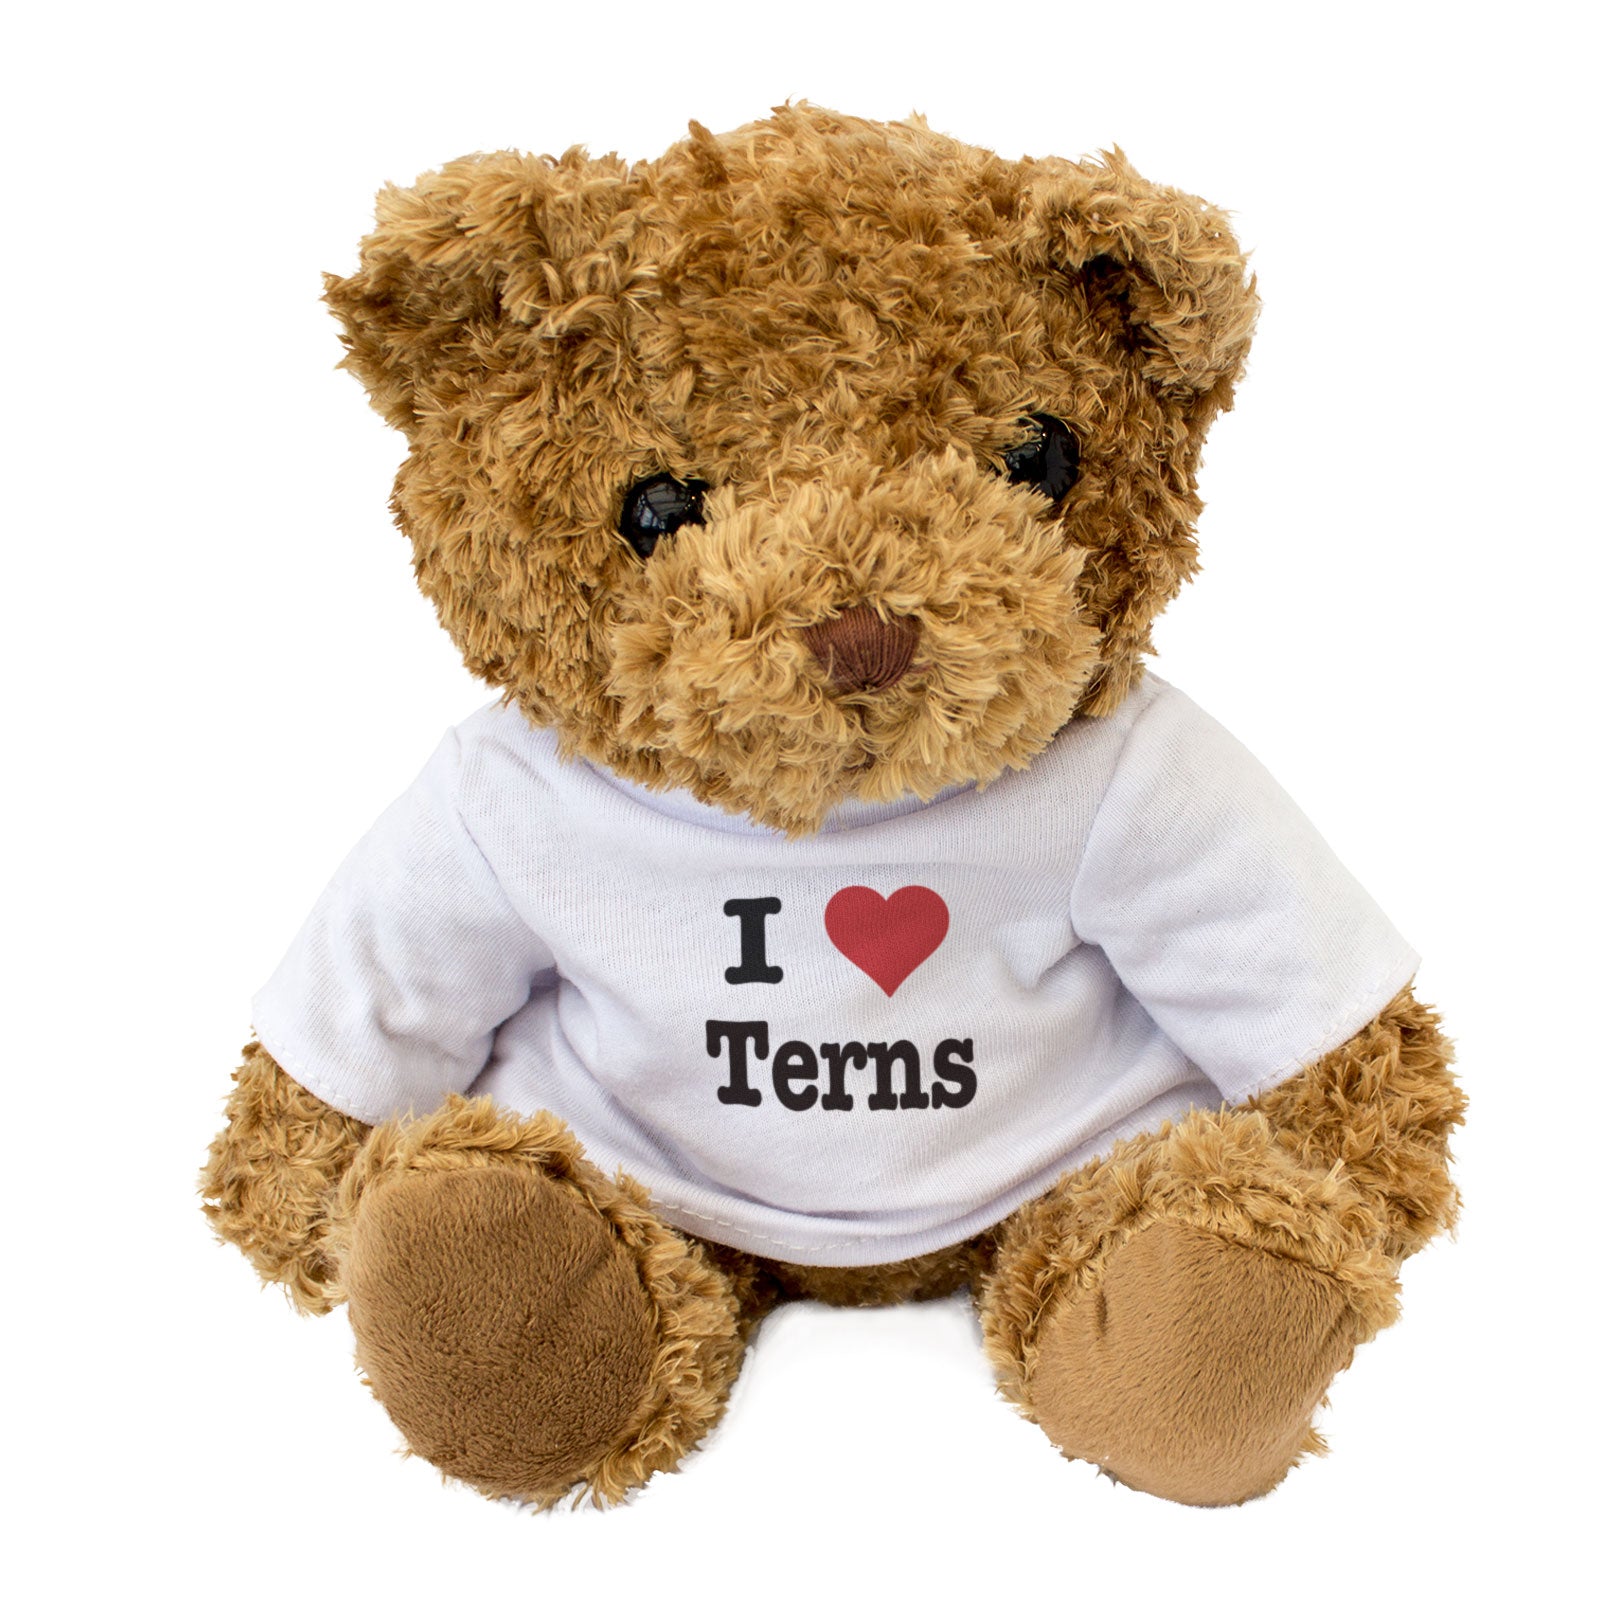 I Love Terns - Teddy Bear